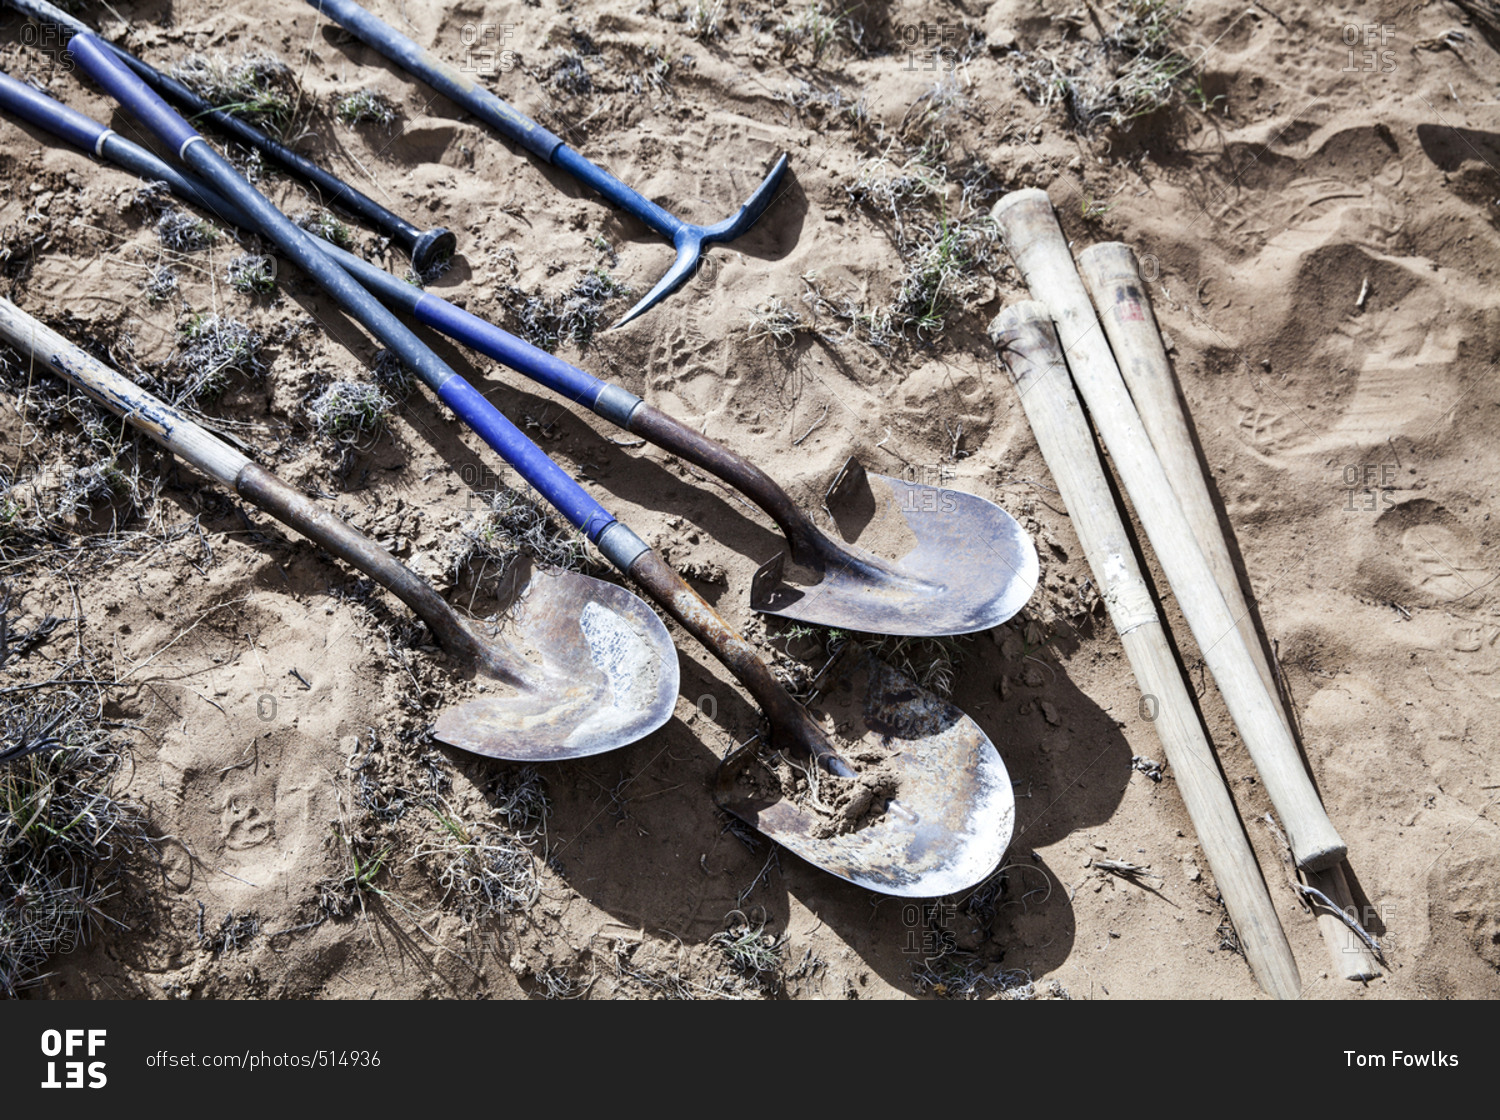 Digging tools on desert ground